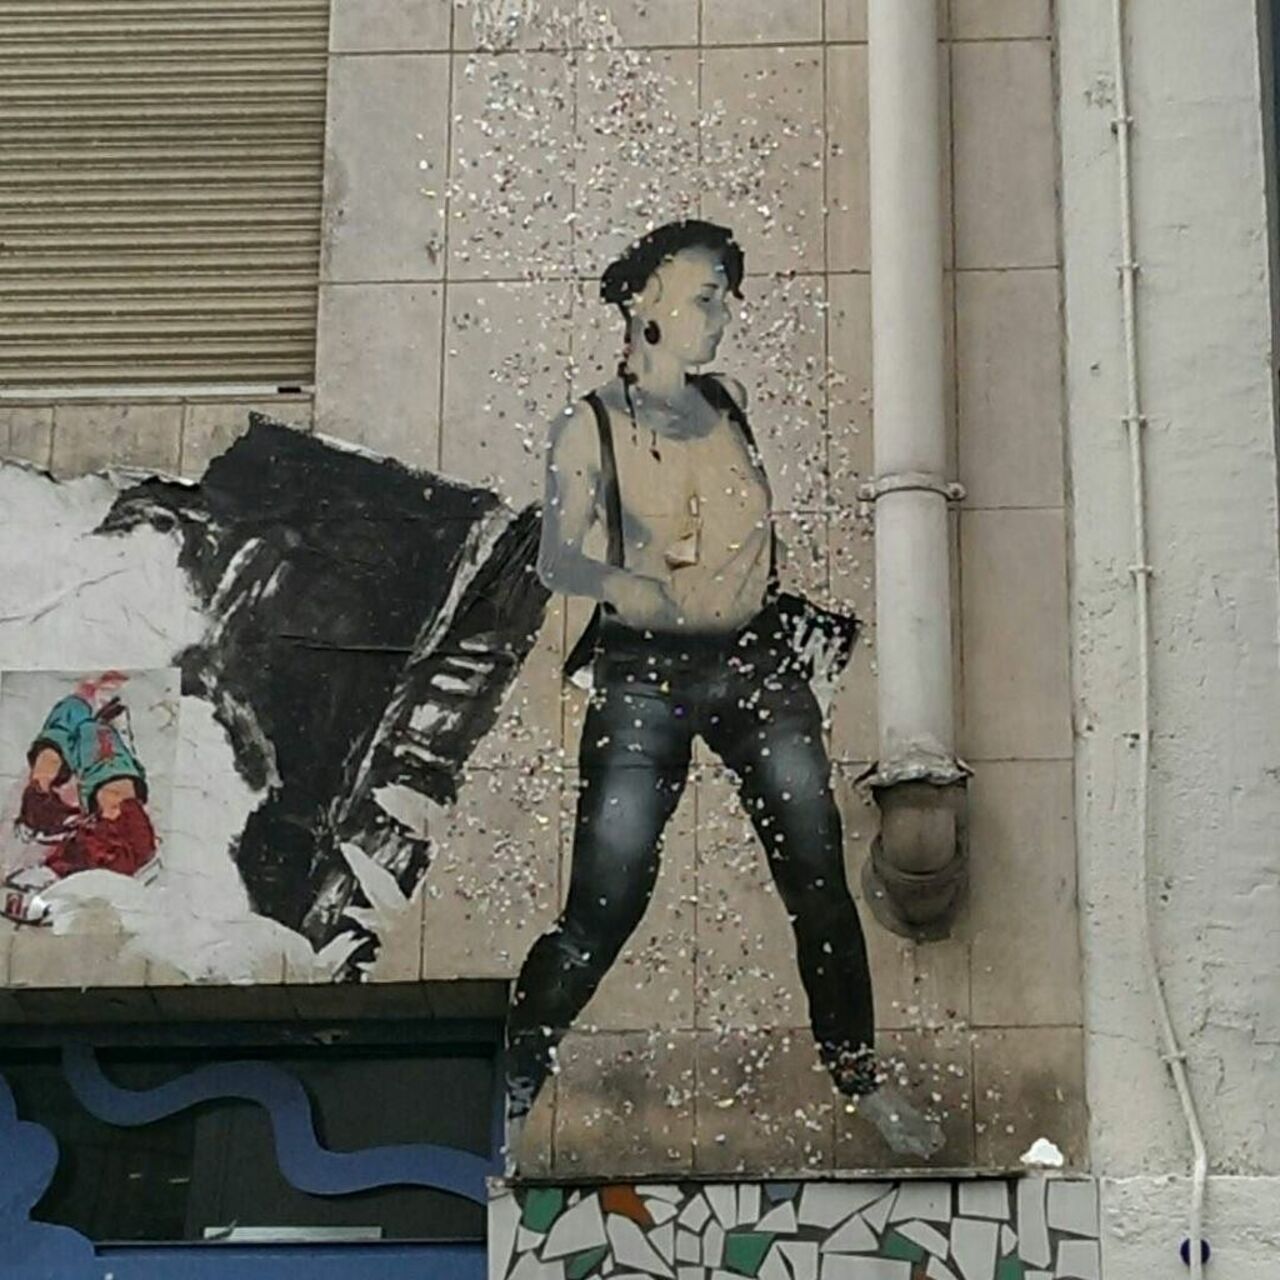 RT @StArtEverywhere: #streetart #streetarteverywhere #streetshot #graffitiart #graffiti #arturbain #urbanart  #mur #mural #wall #wallart… https://t.co/0NkekgqjC1